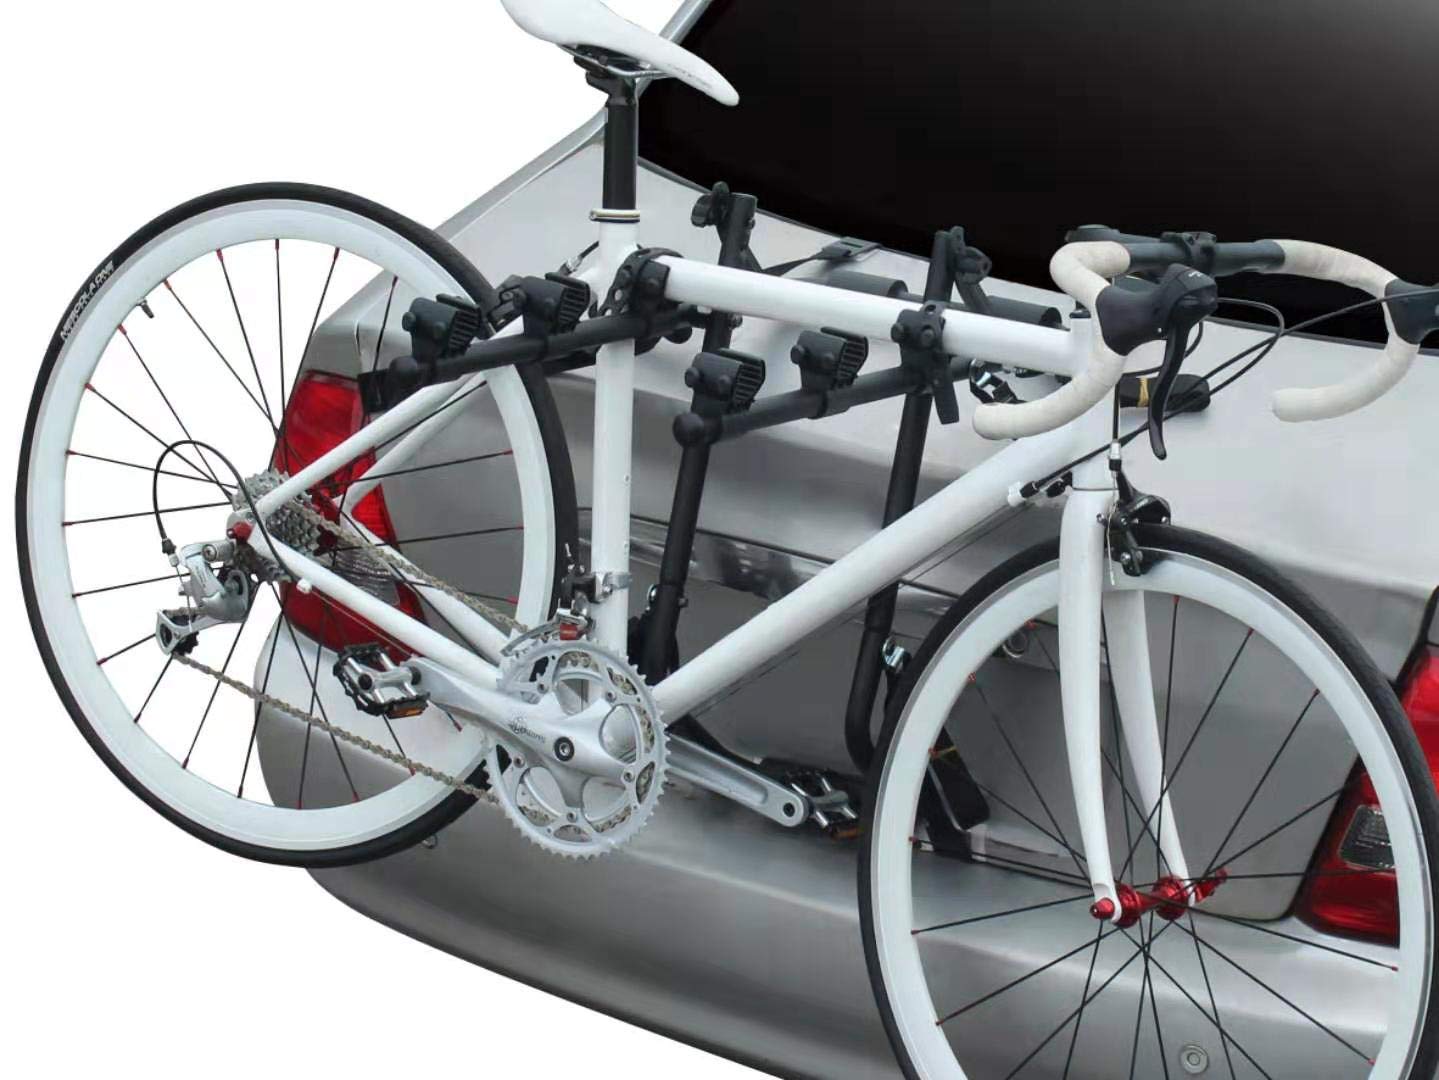 Republic Universal Trunk Bike Carrier Rear Bike Rack For Cars